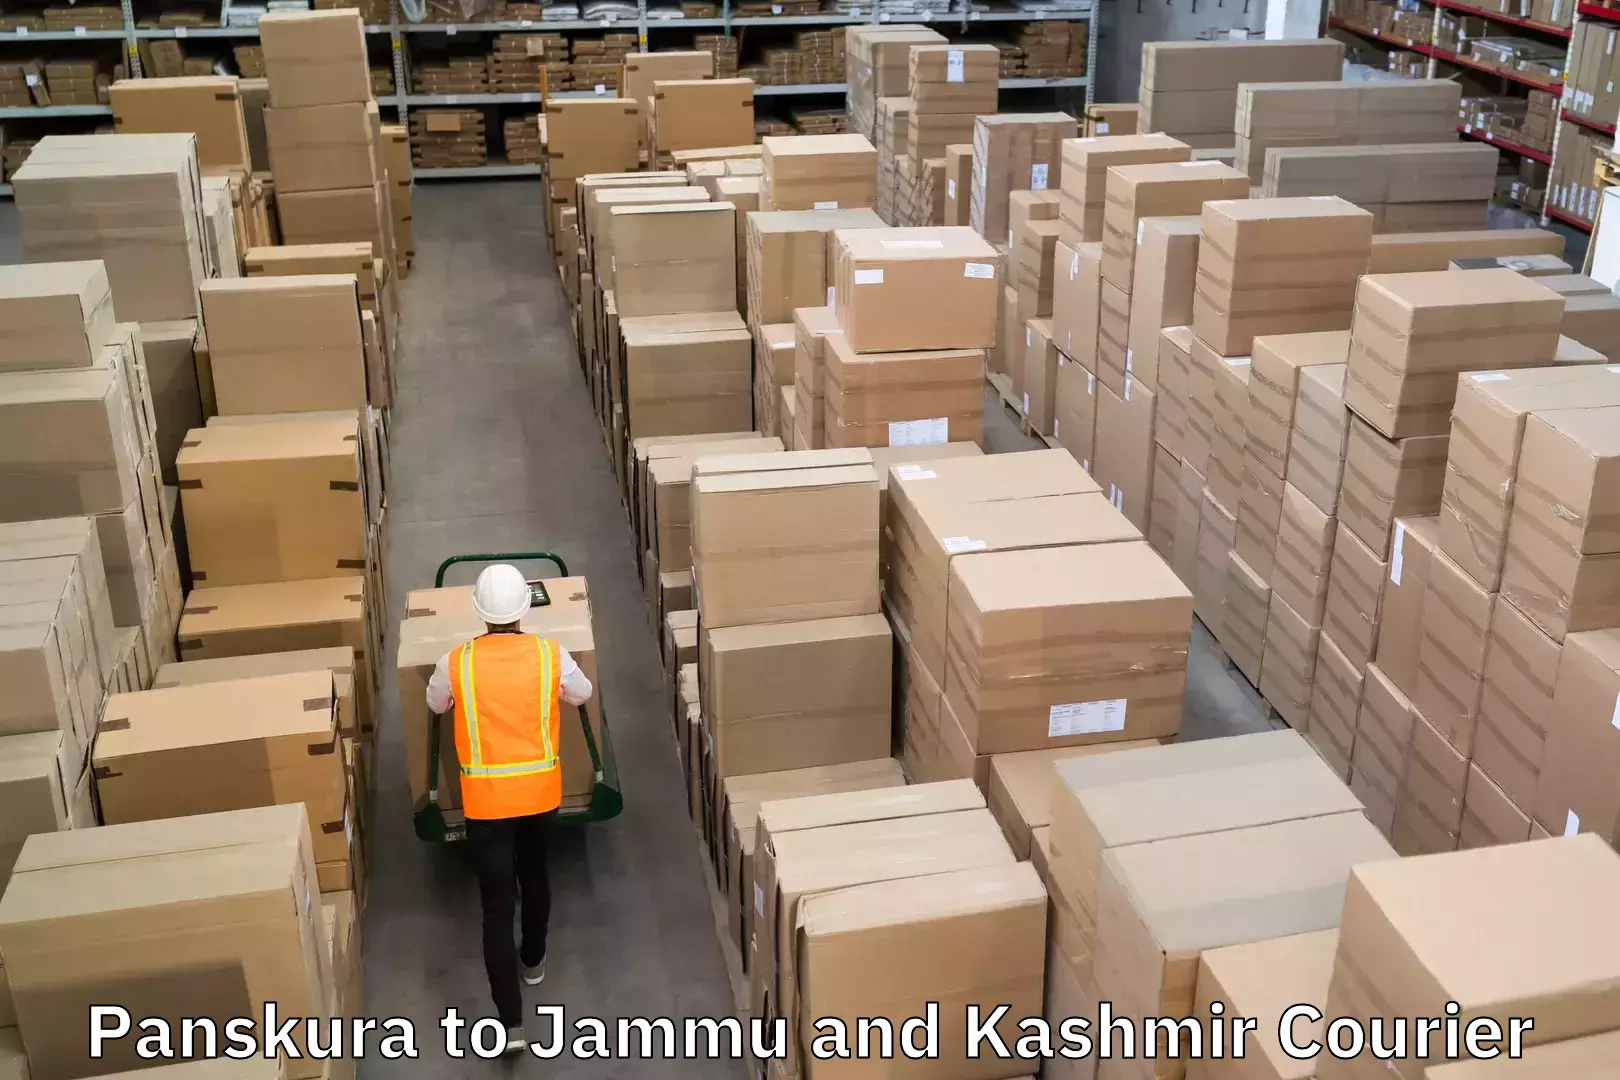 Courier service booking Panskura to Jammu and Kashmir